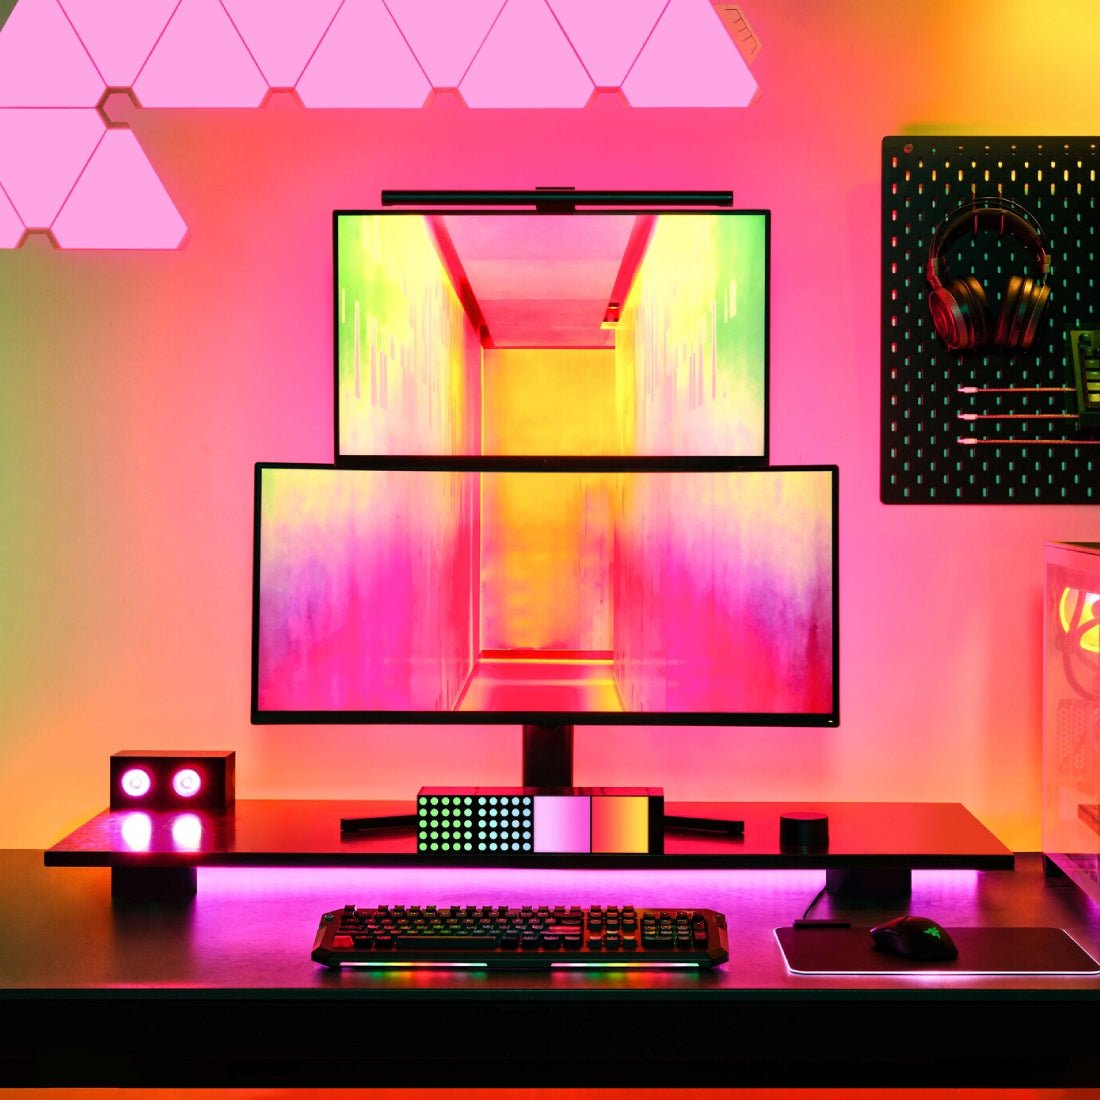 Yeelight Cube Light Smart Gaming Lamp Matrix Expansion - إضاءة - Store 974 | ستور ٩٧٤